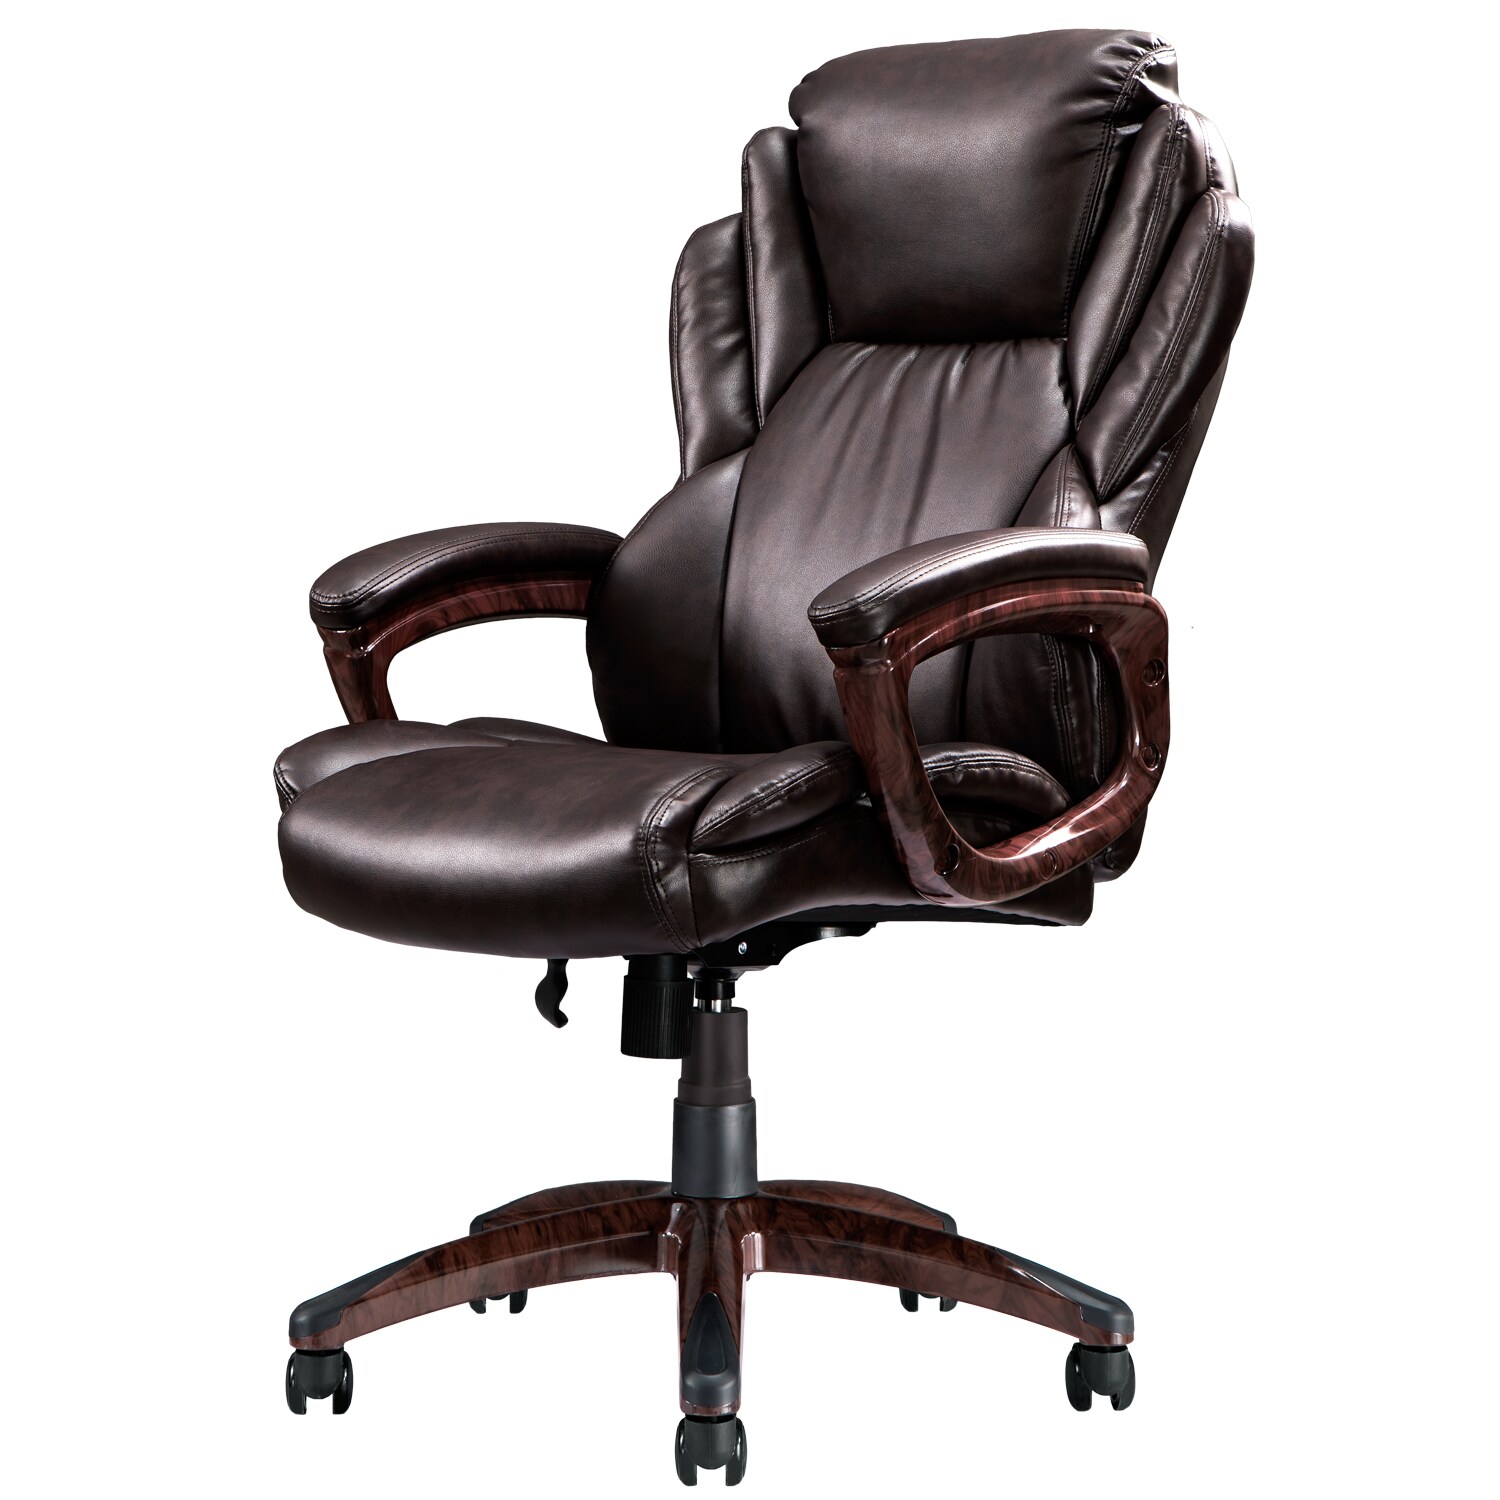 XIZZI Dark Brown Office Chair Traditional Ergonomic Adjustable